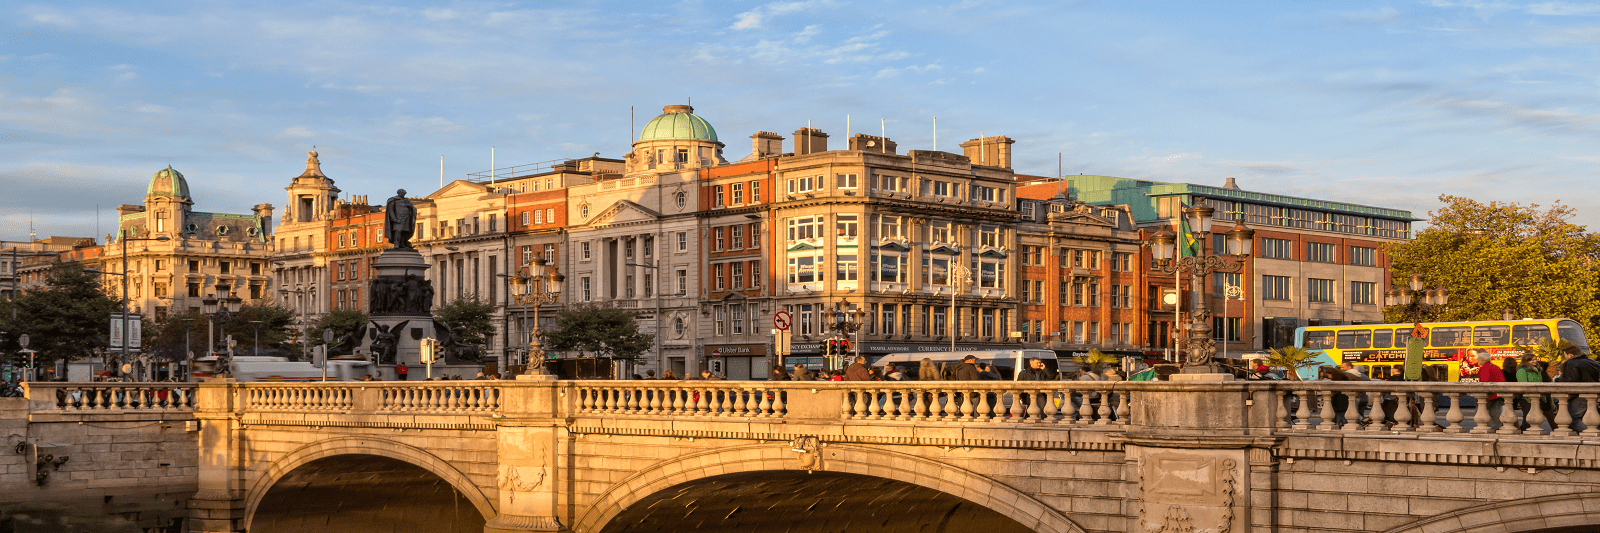 Dublin Tourist Attractions